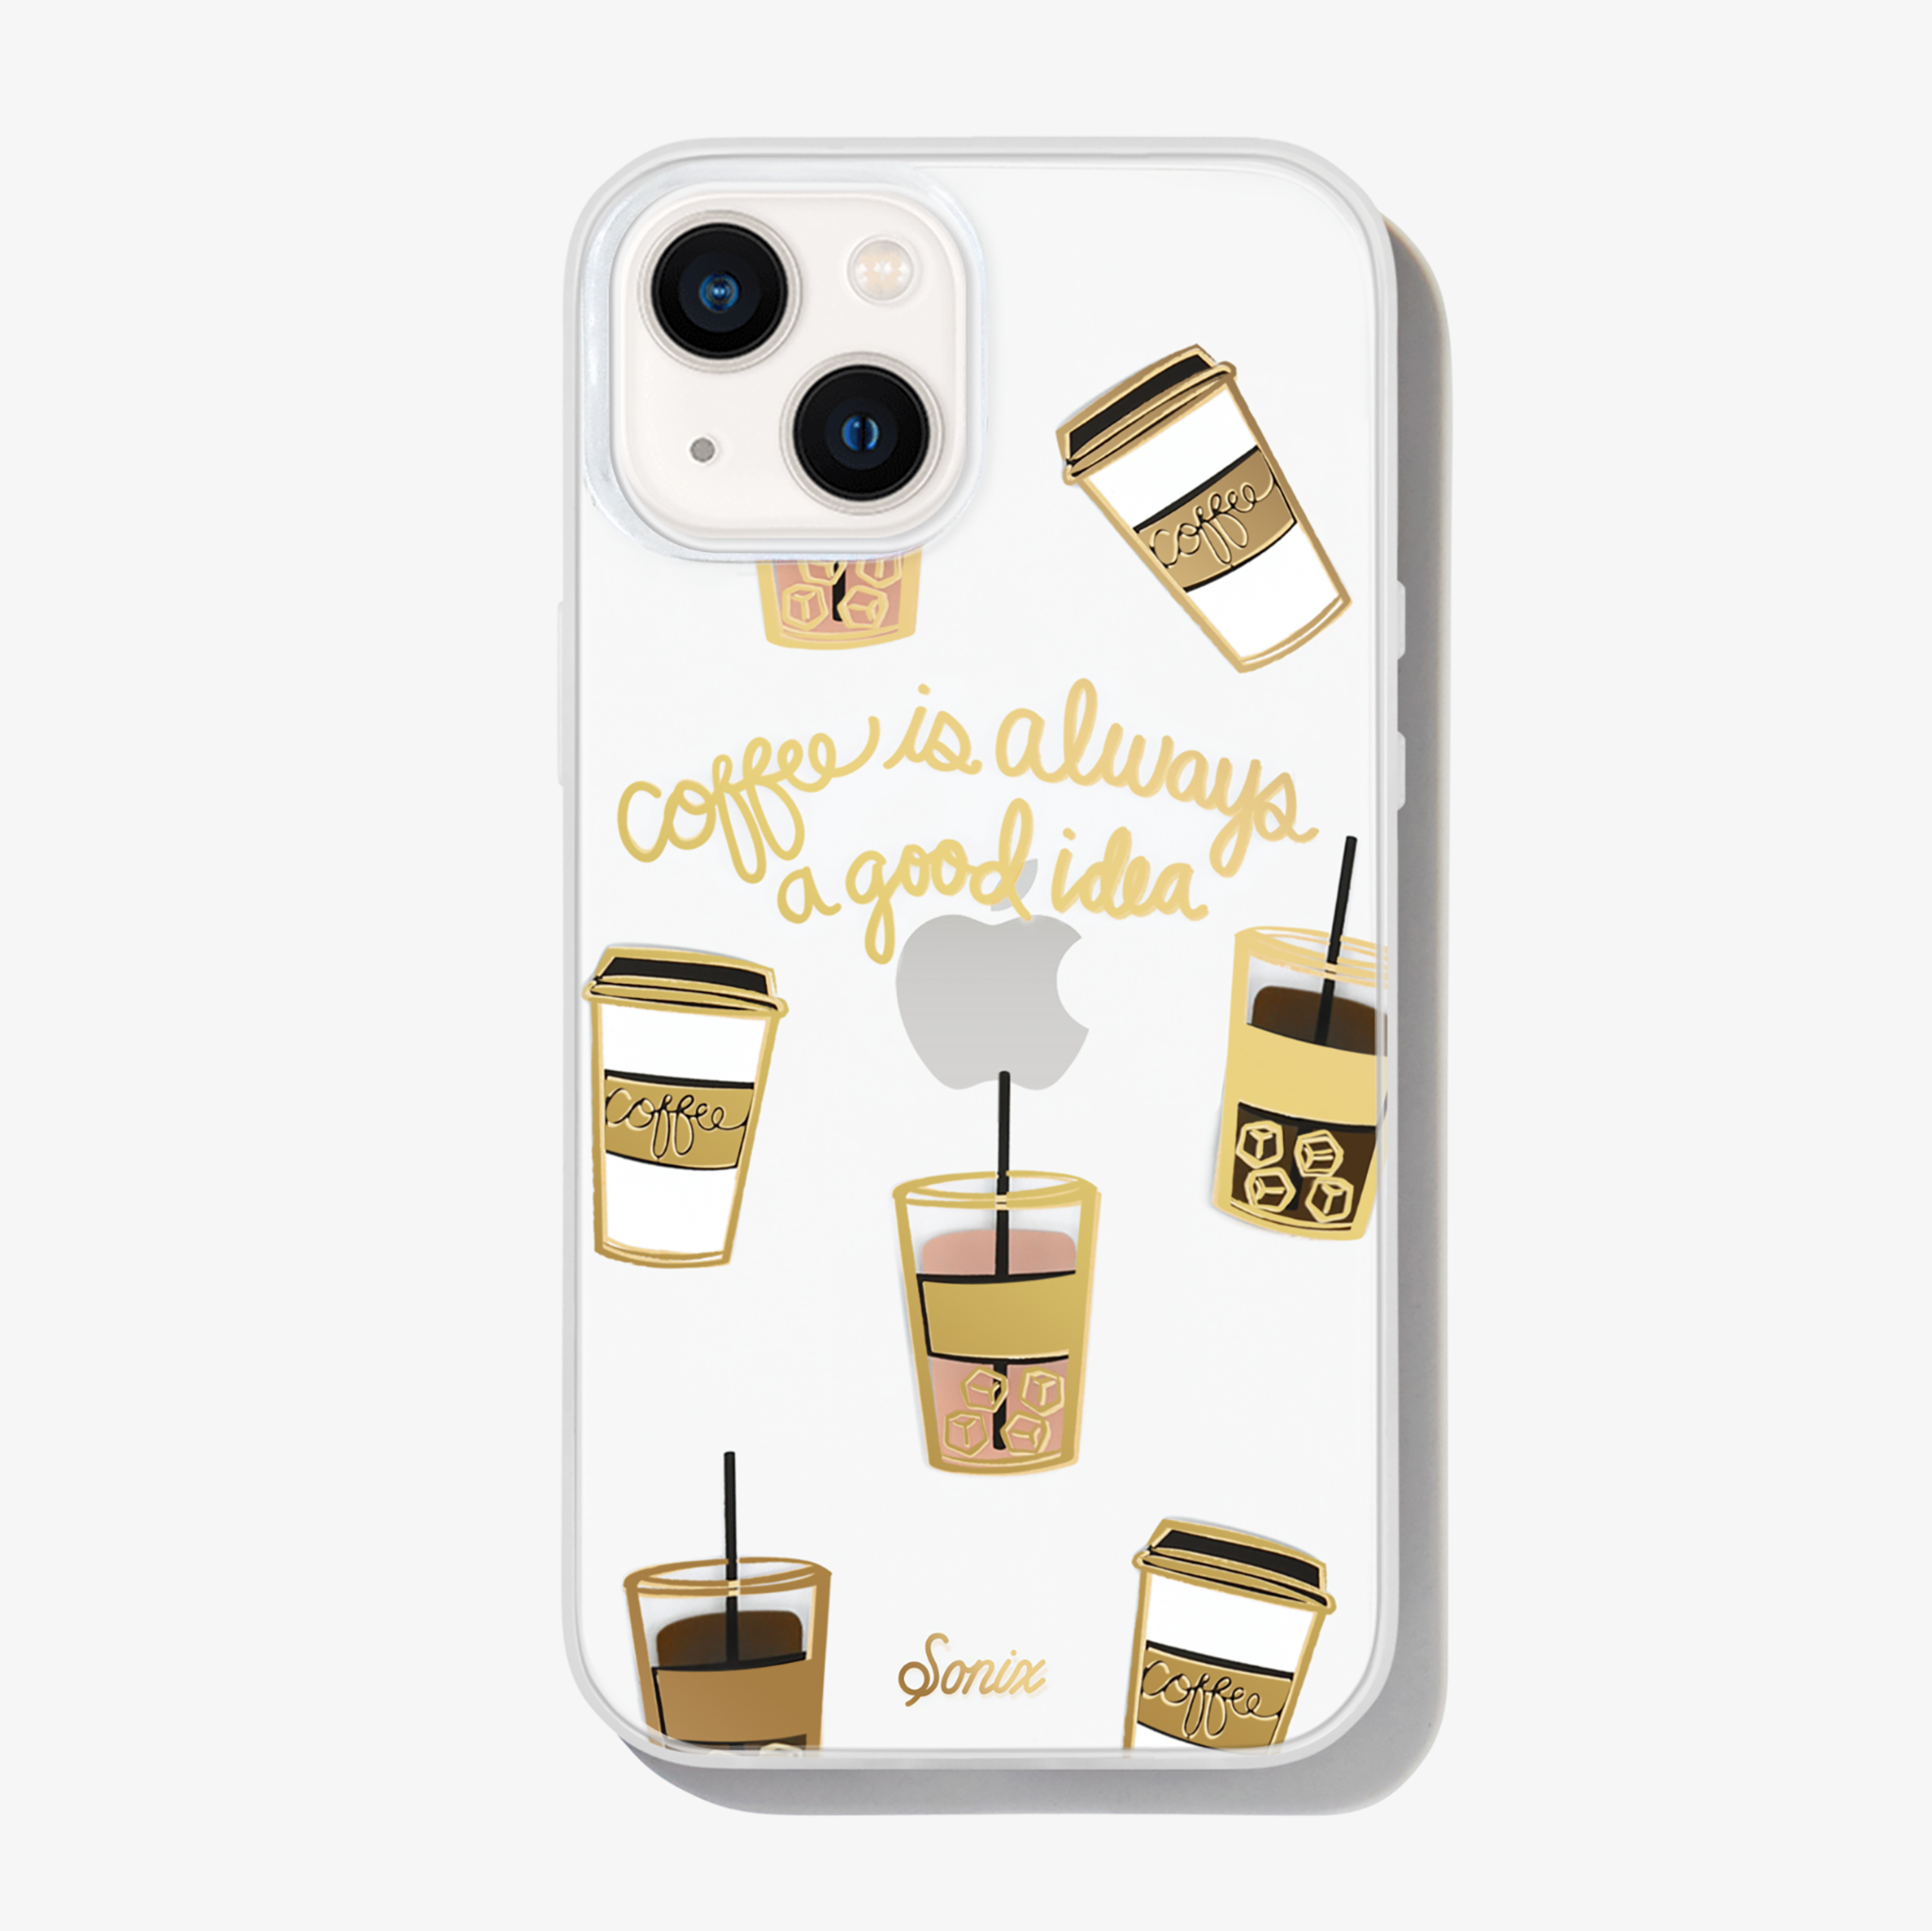 Coffee iPhone Case